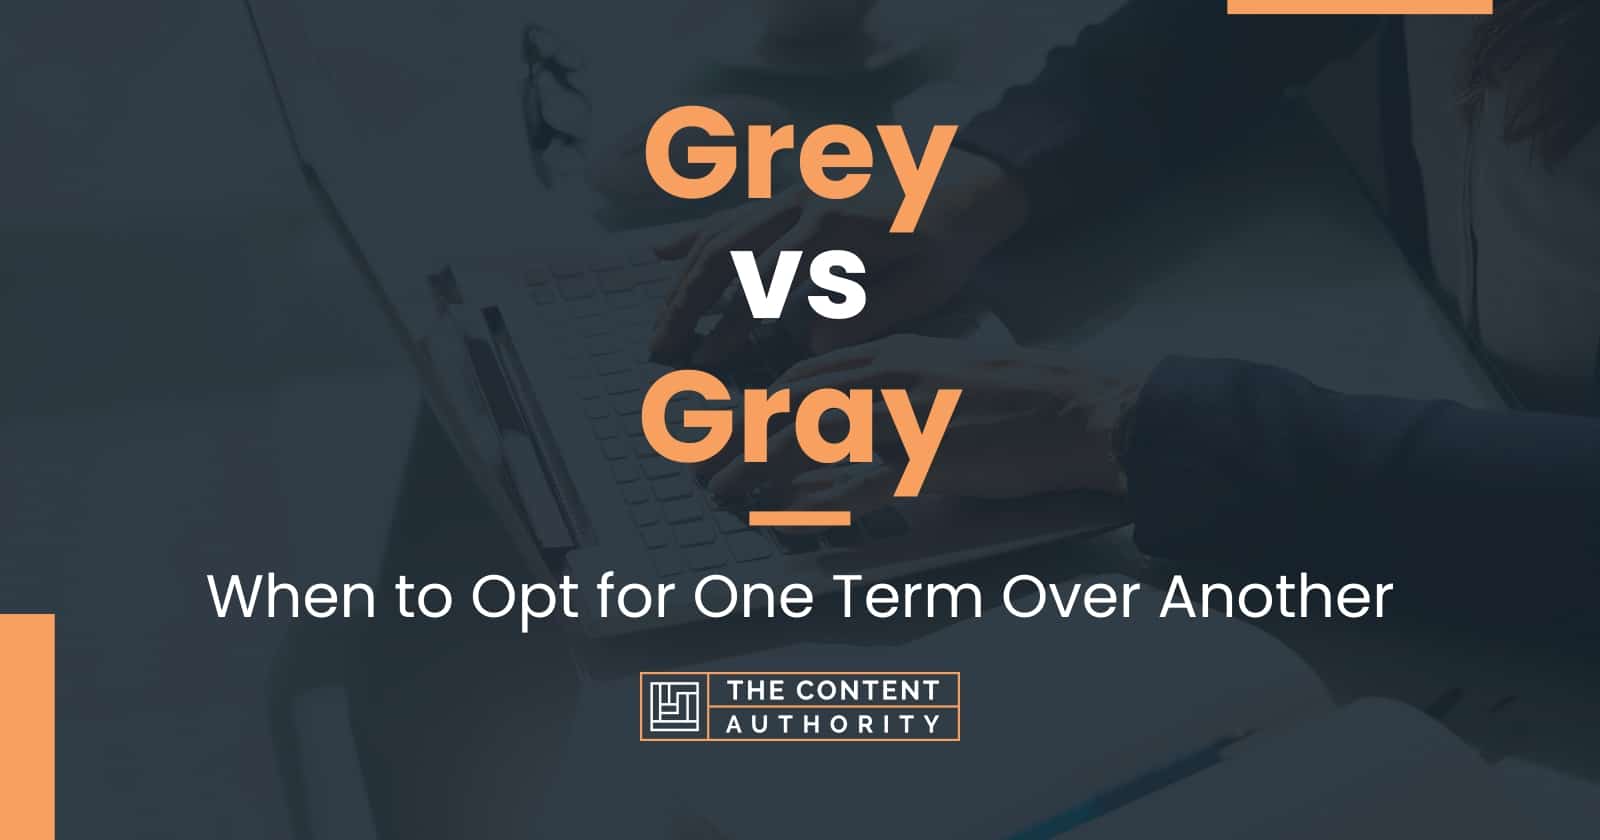 Gray vs Grey - Grammarist.com Official channel. 